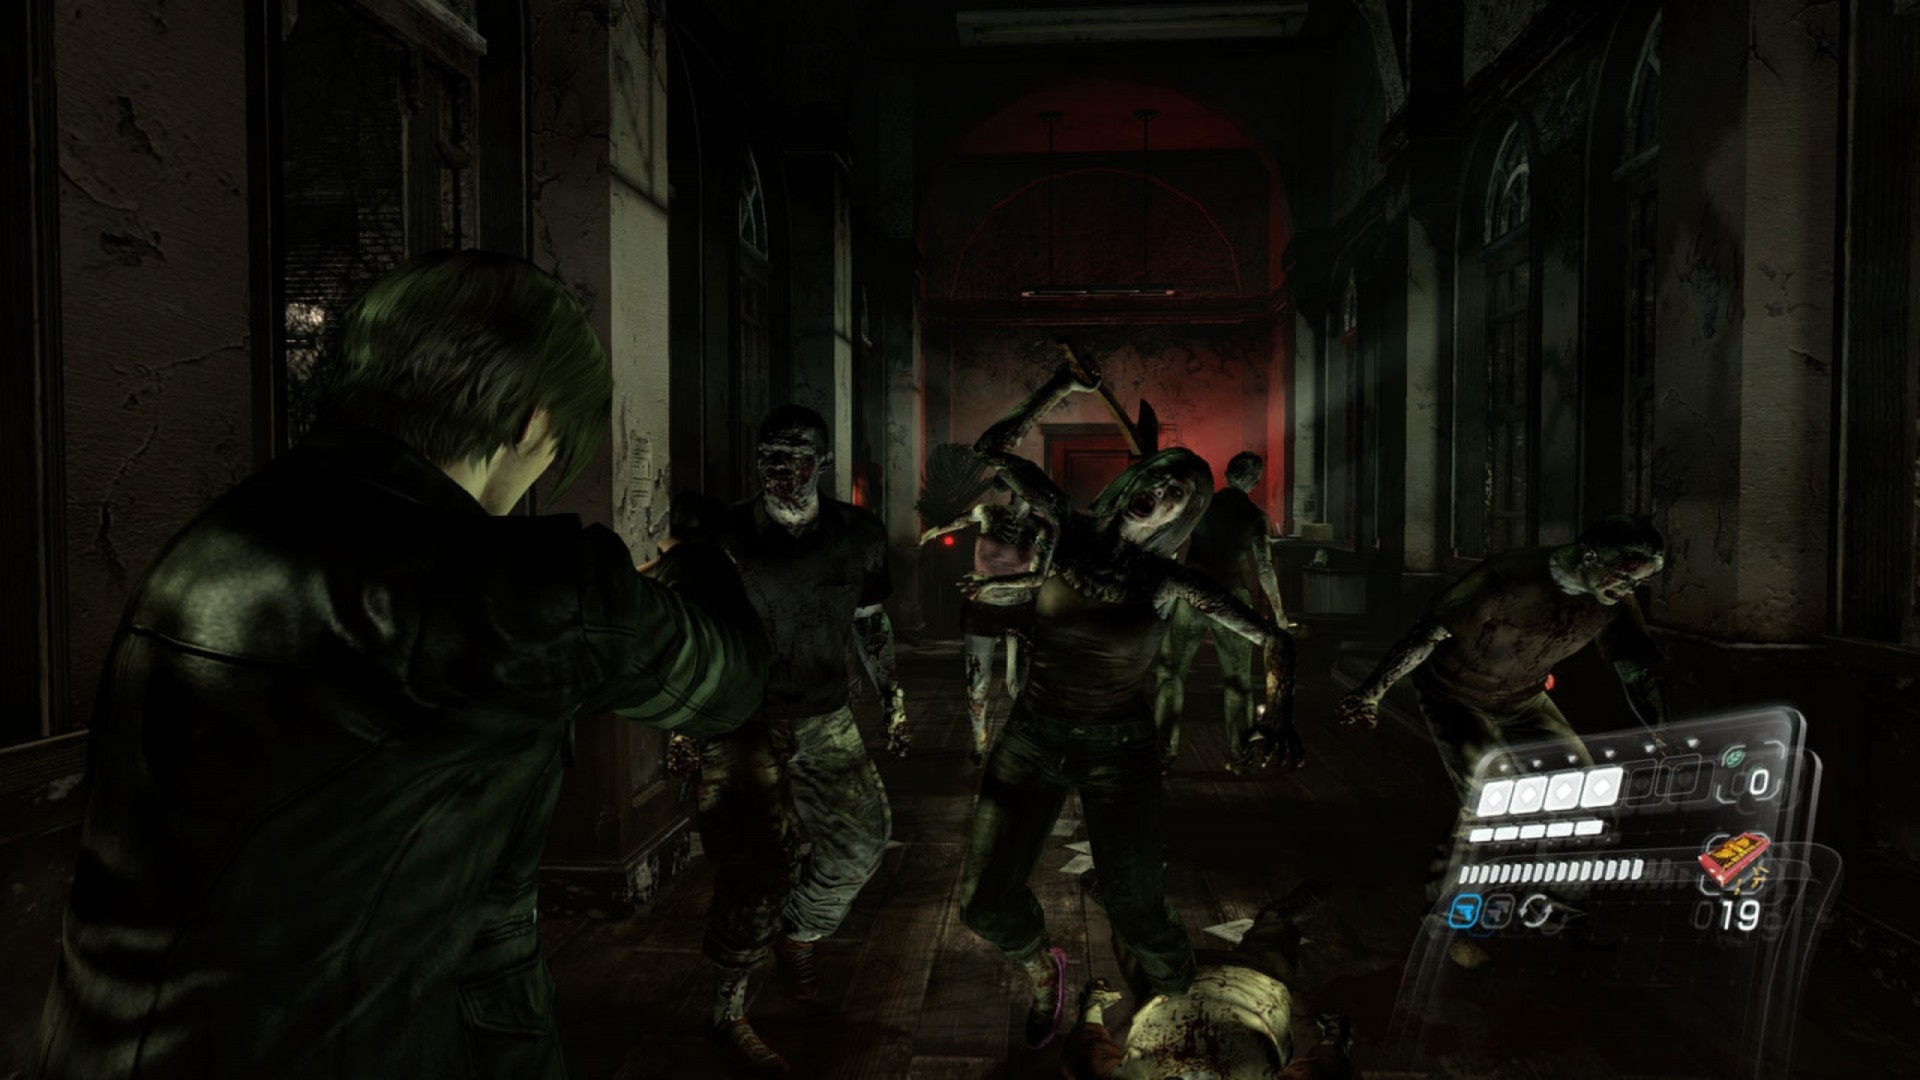 Resident Evil 6 | LATAM (ad65bc20-9585-4231-b72b-51471605ffa3)